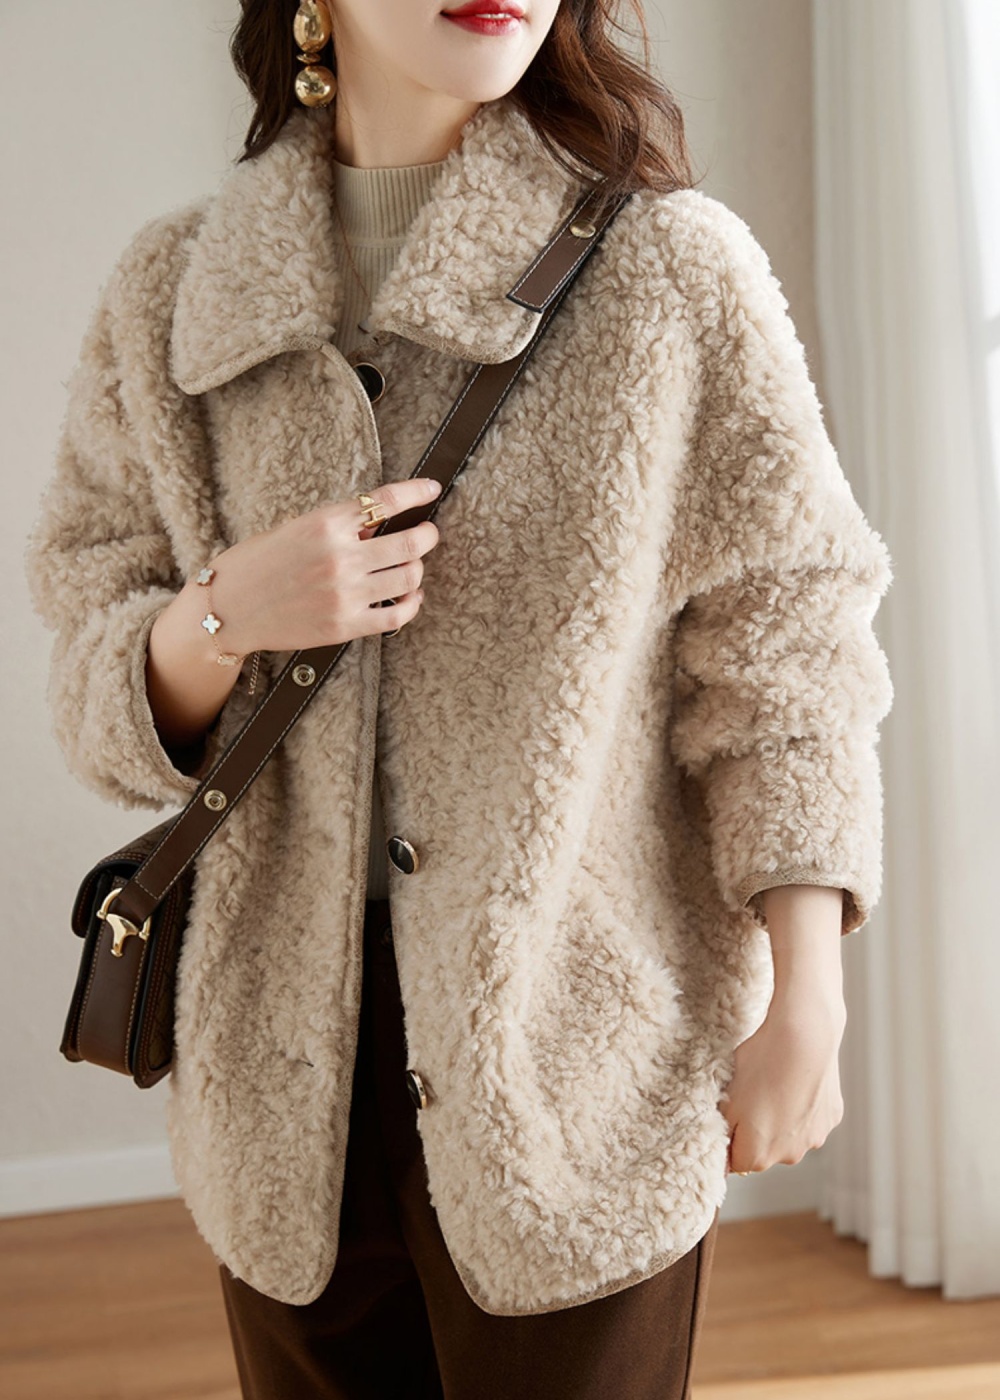 Wool short overcoat small fellow winter coat for women